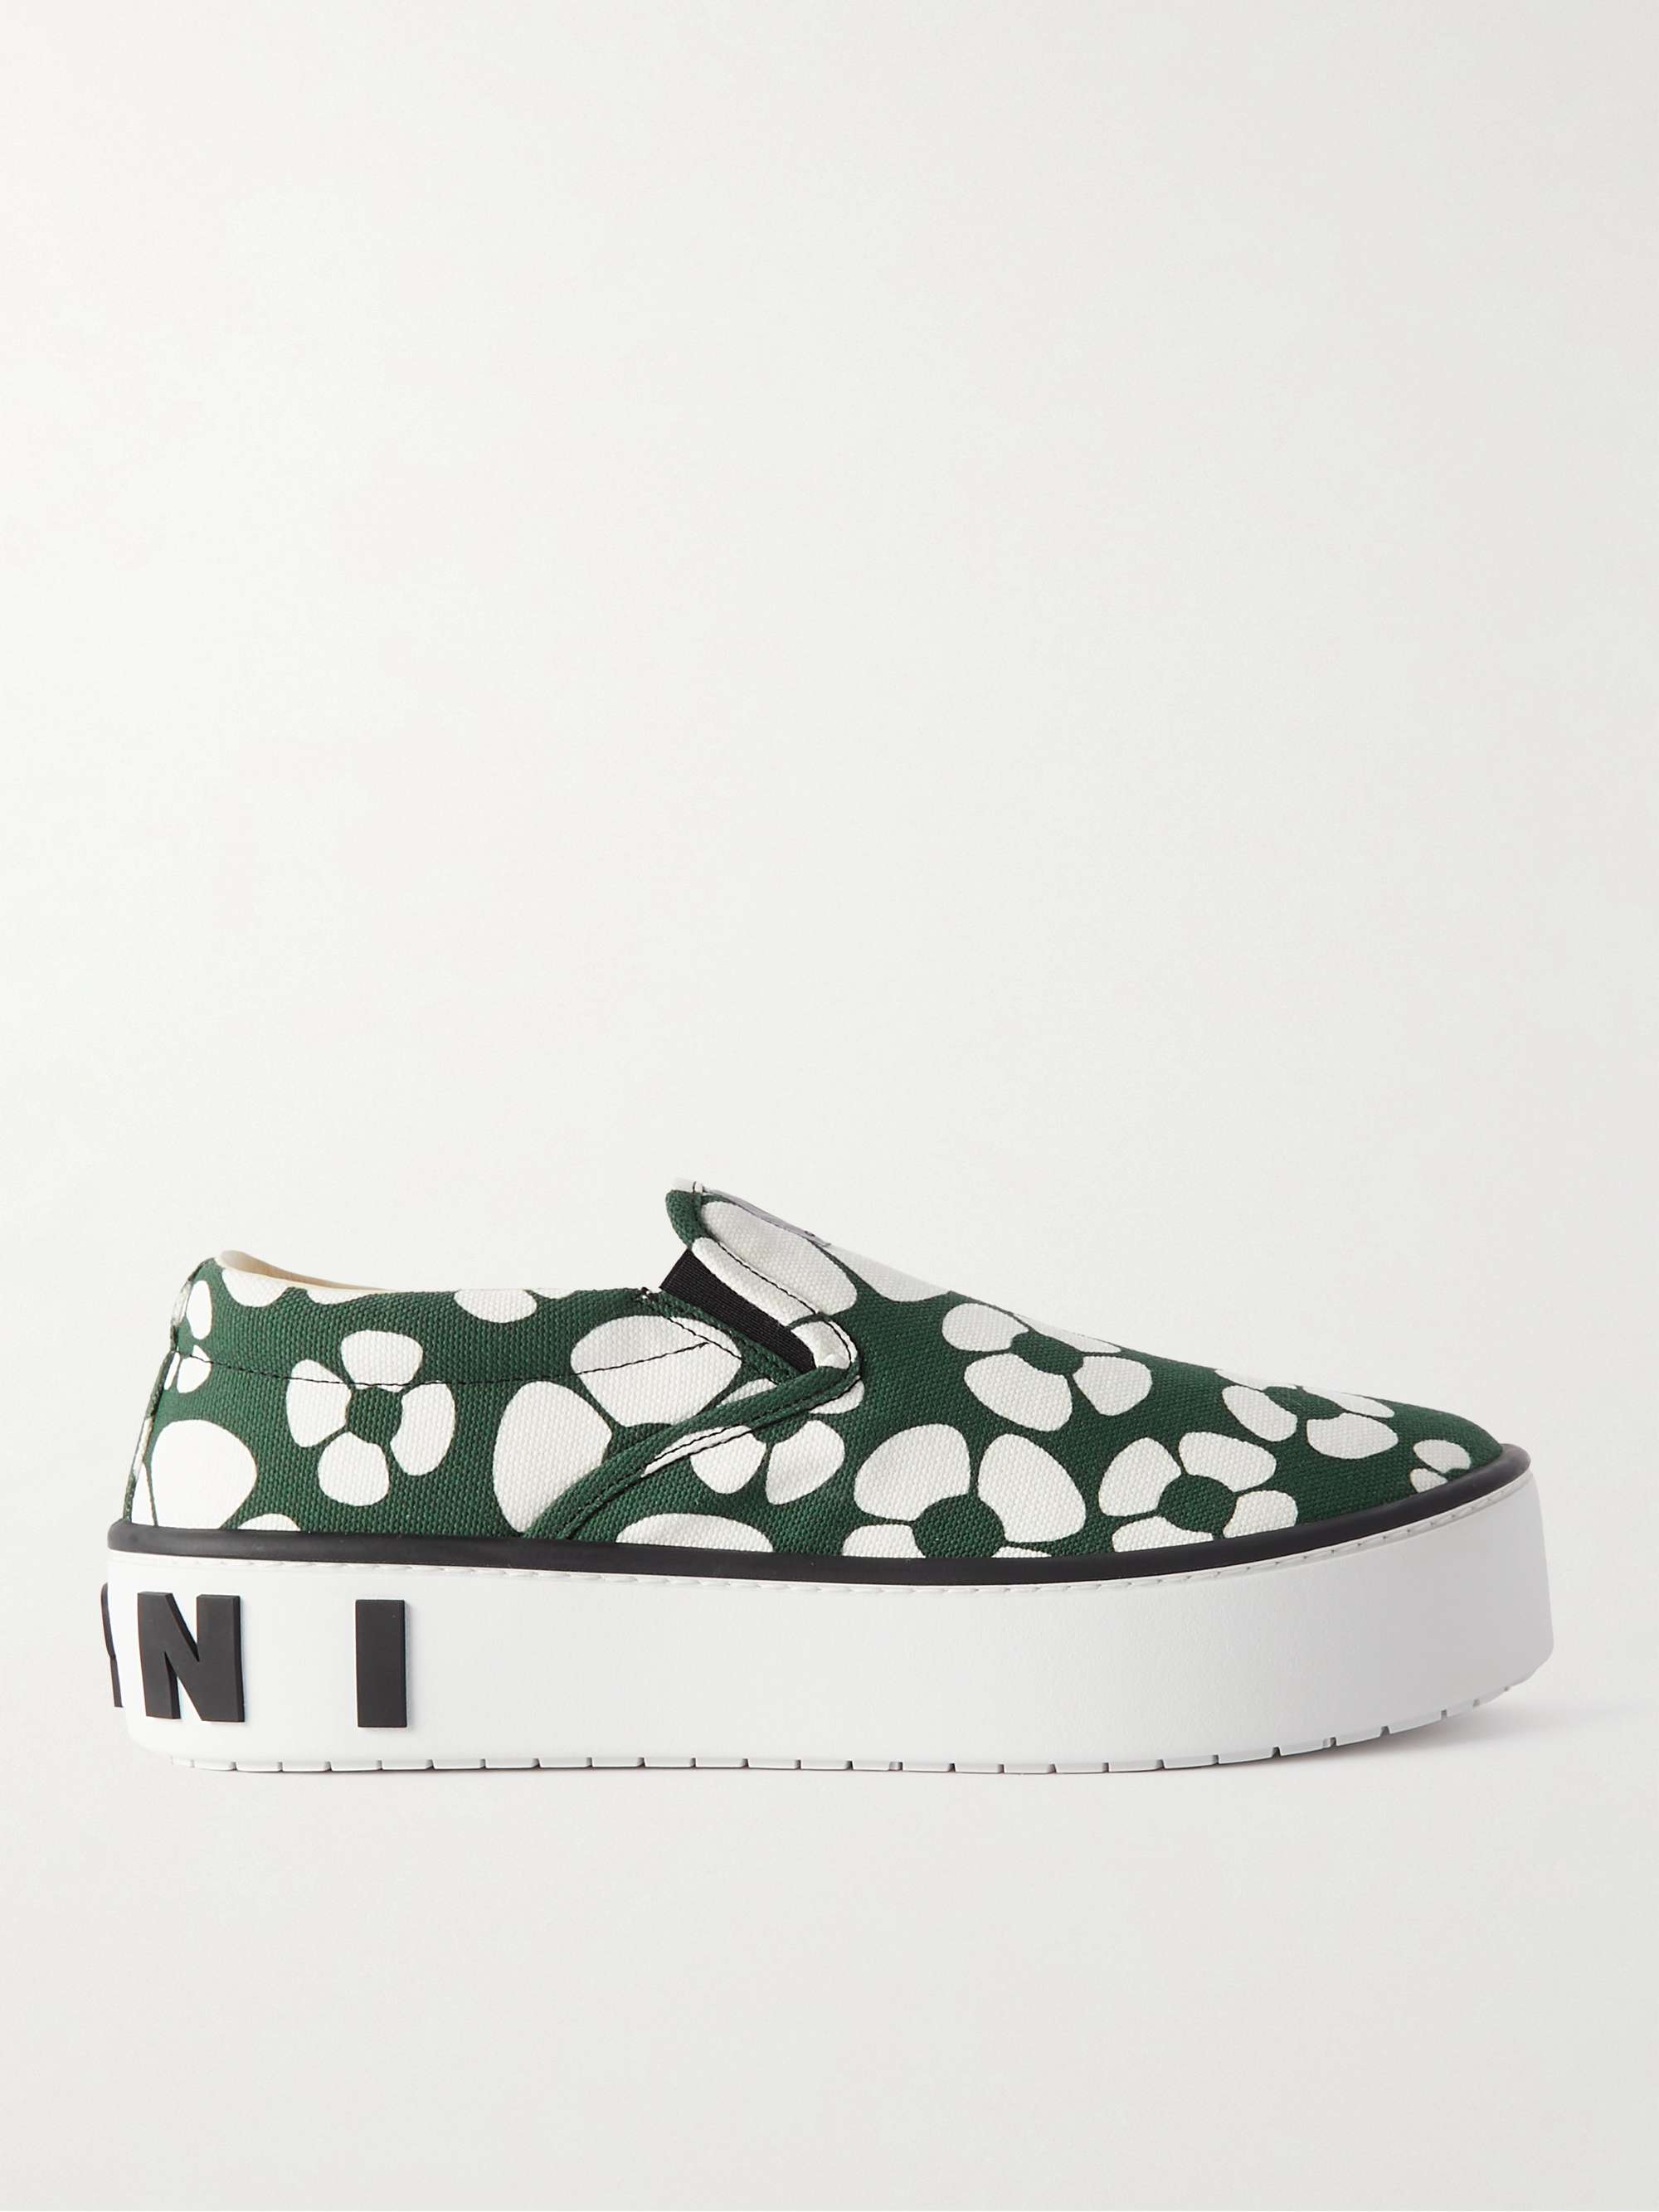 MARNI + Carhartt WIP Floral-Print Canvas Slip-On Sneakers | MR PORTER